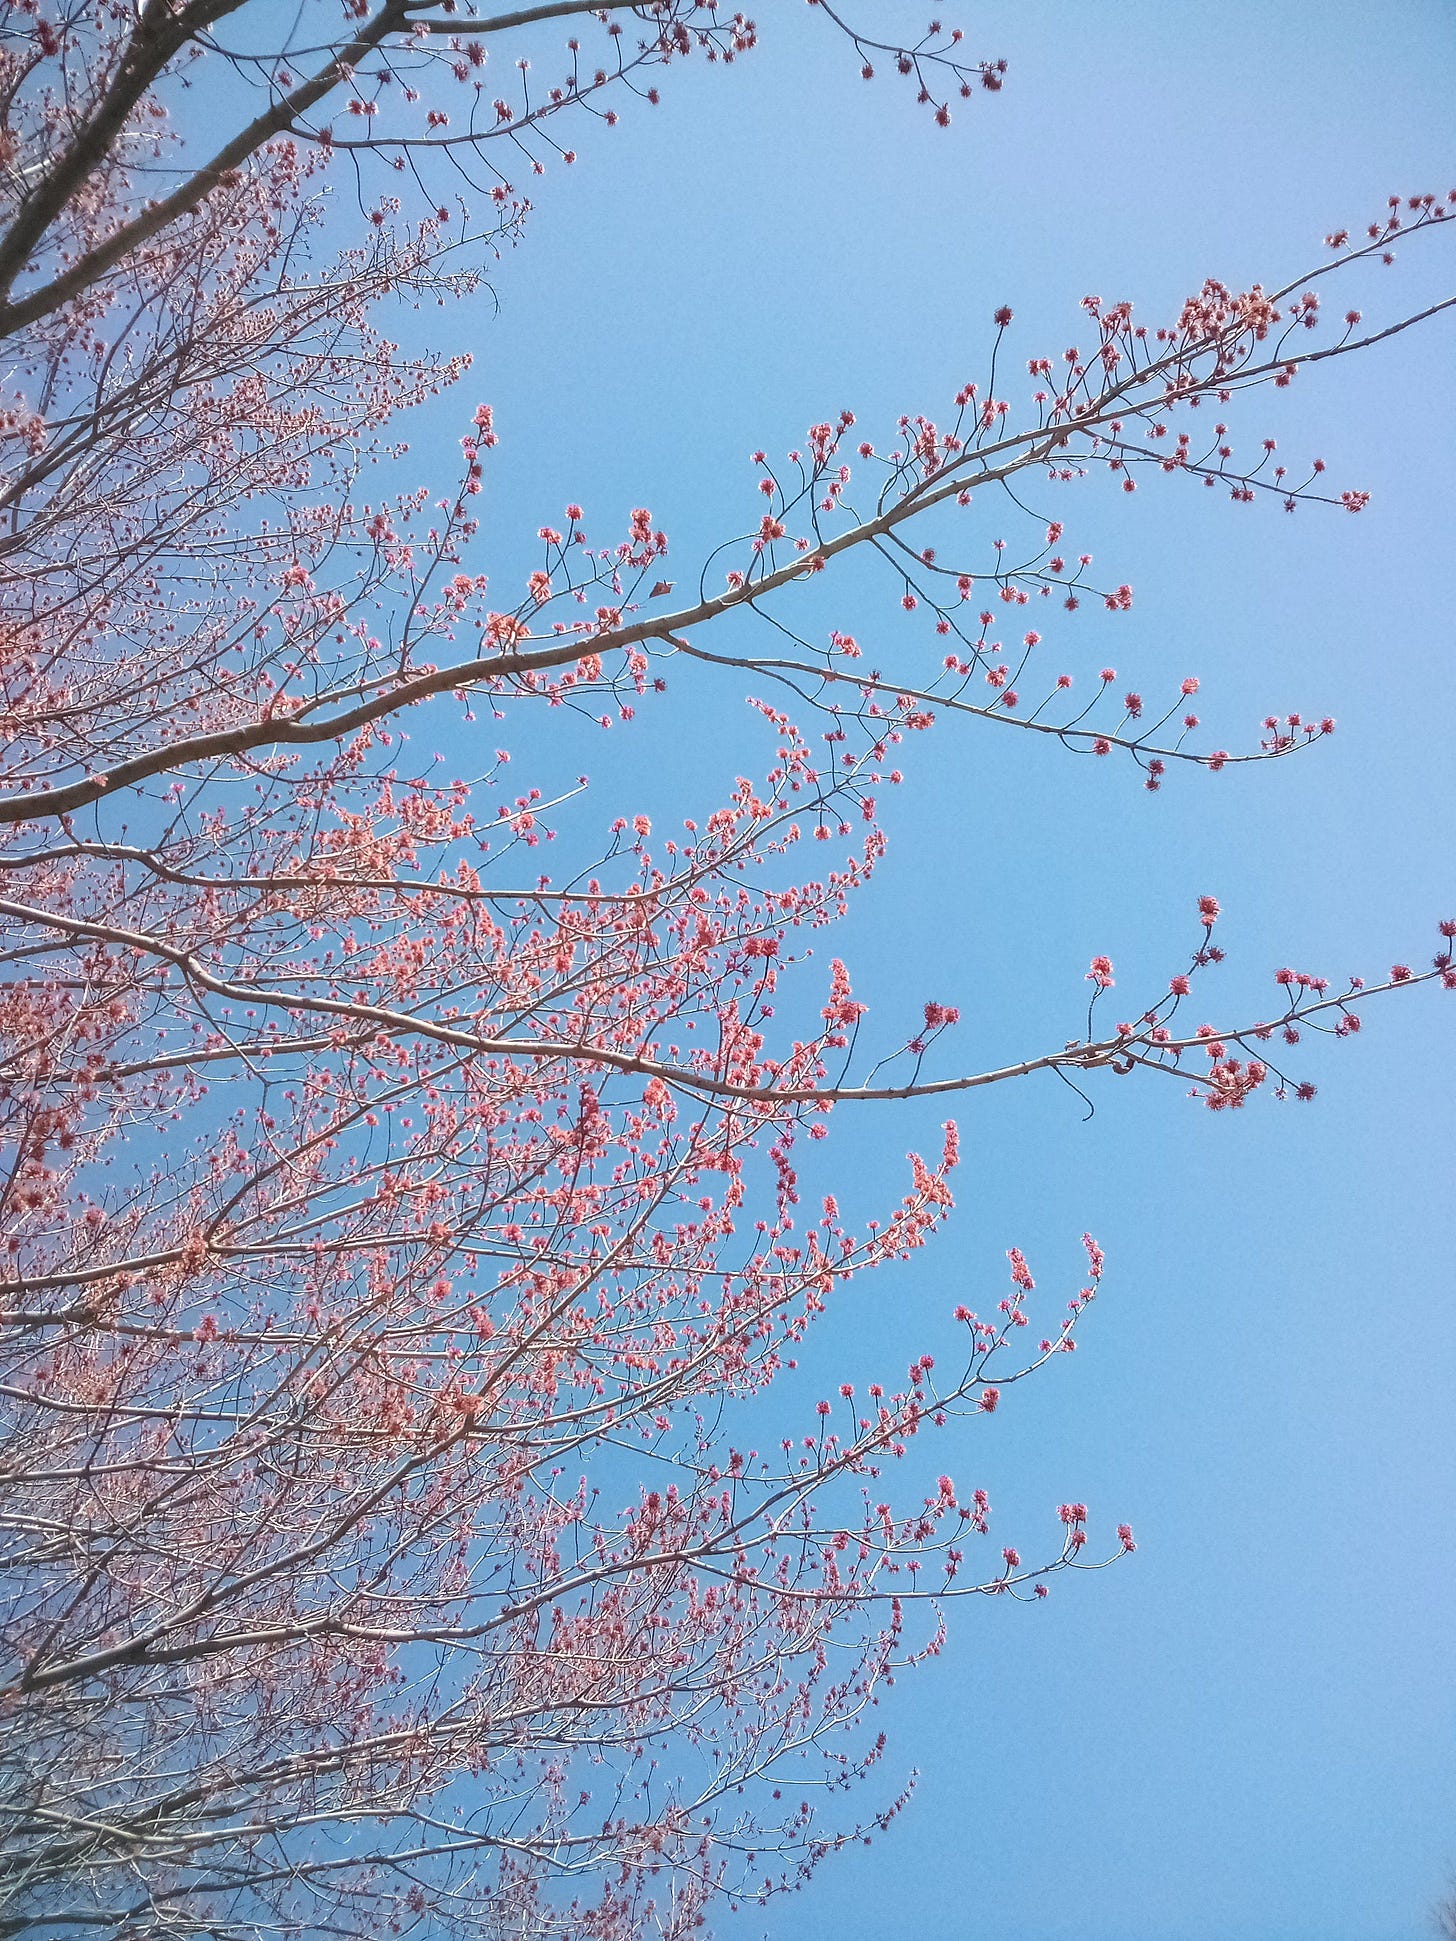 Tree buds against a bright blue sky